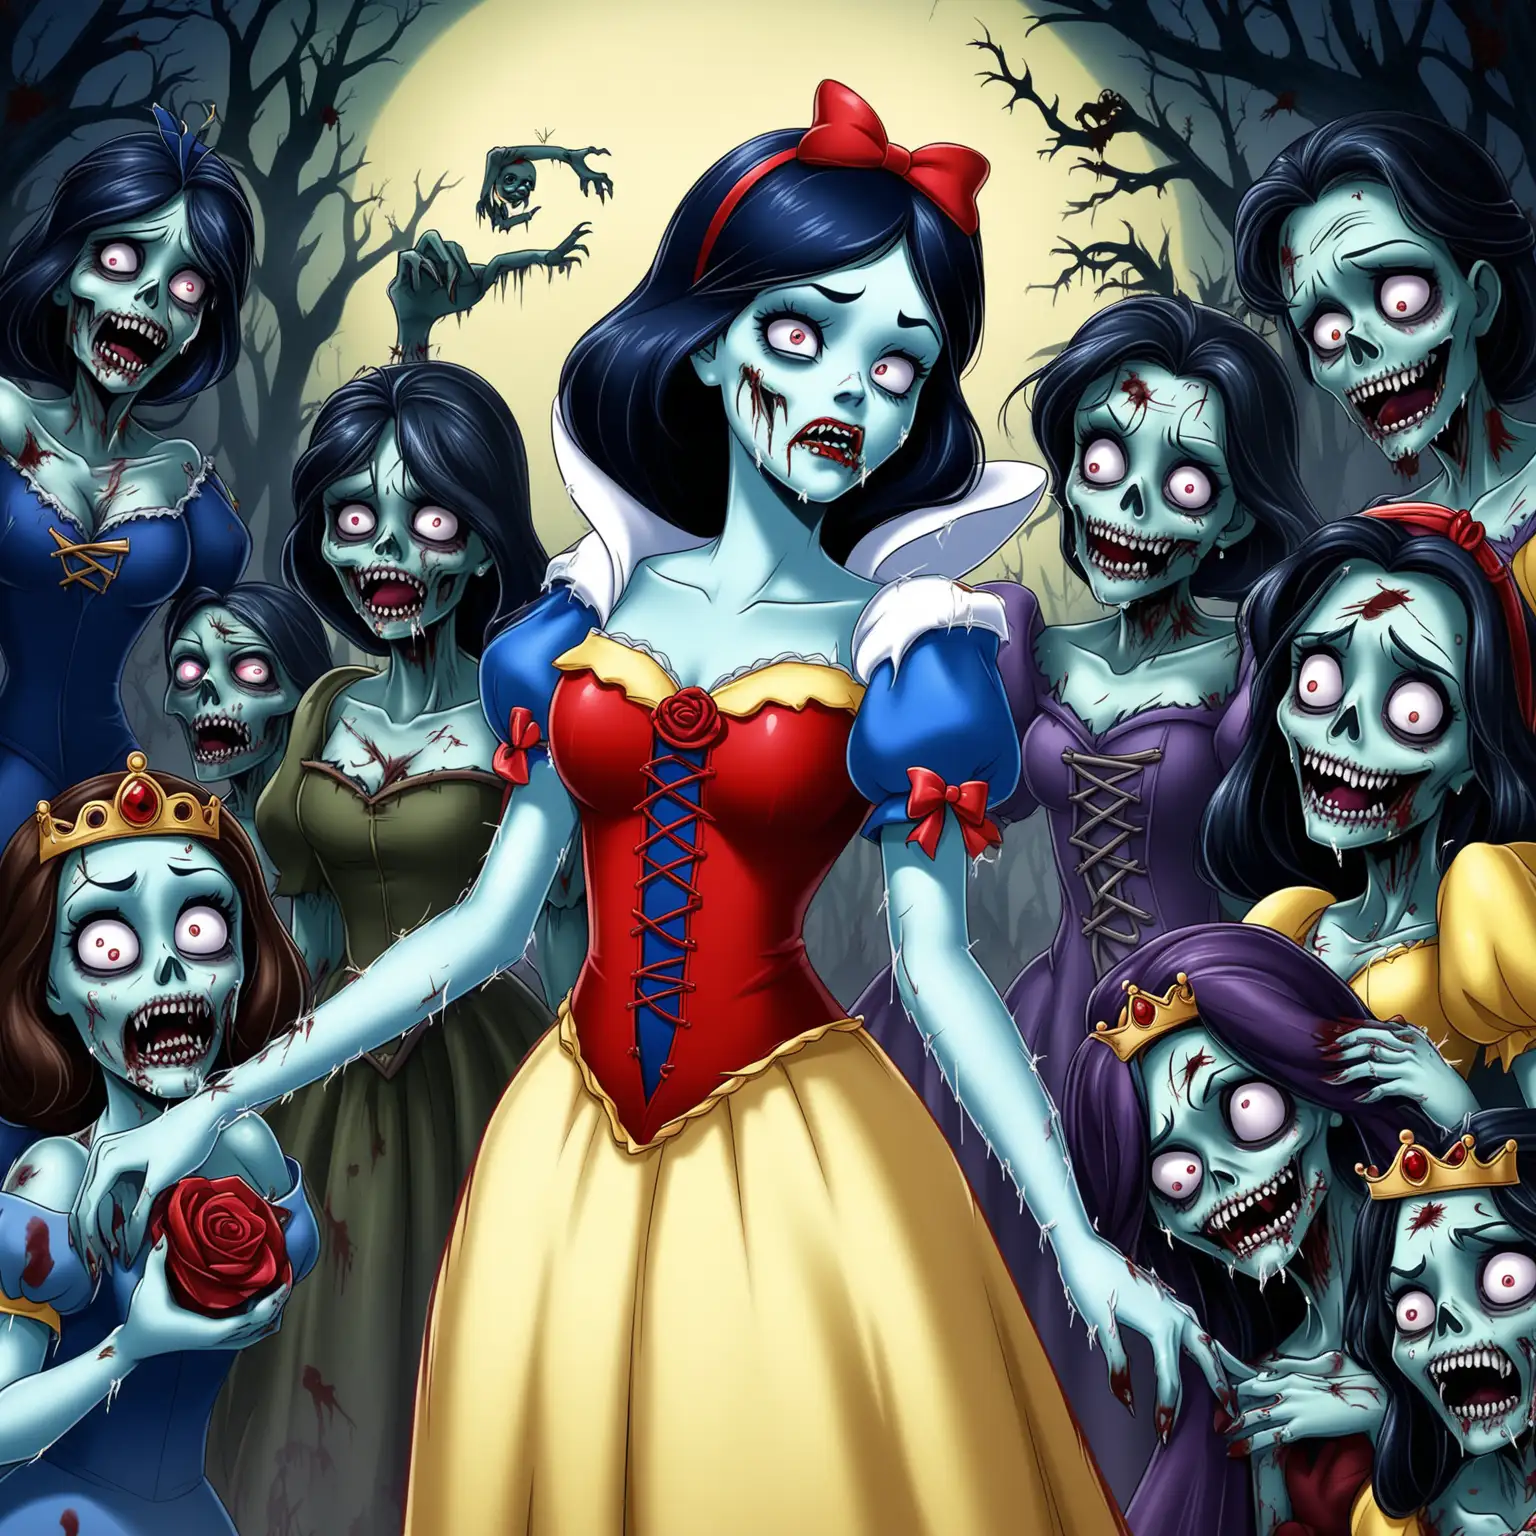 disney princess Snow White dressed as a zombie